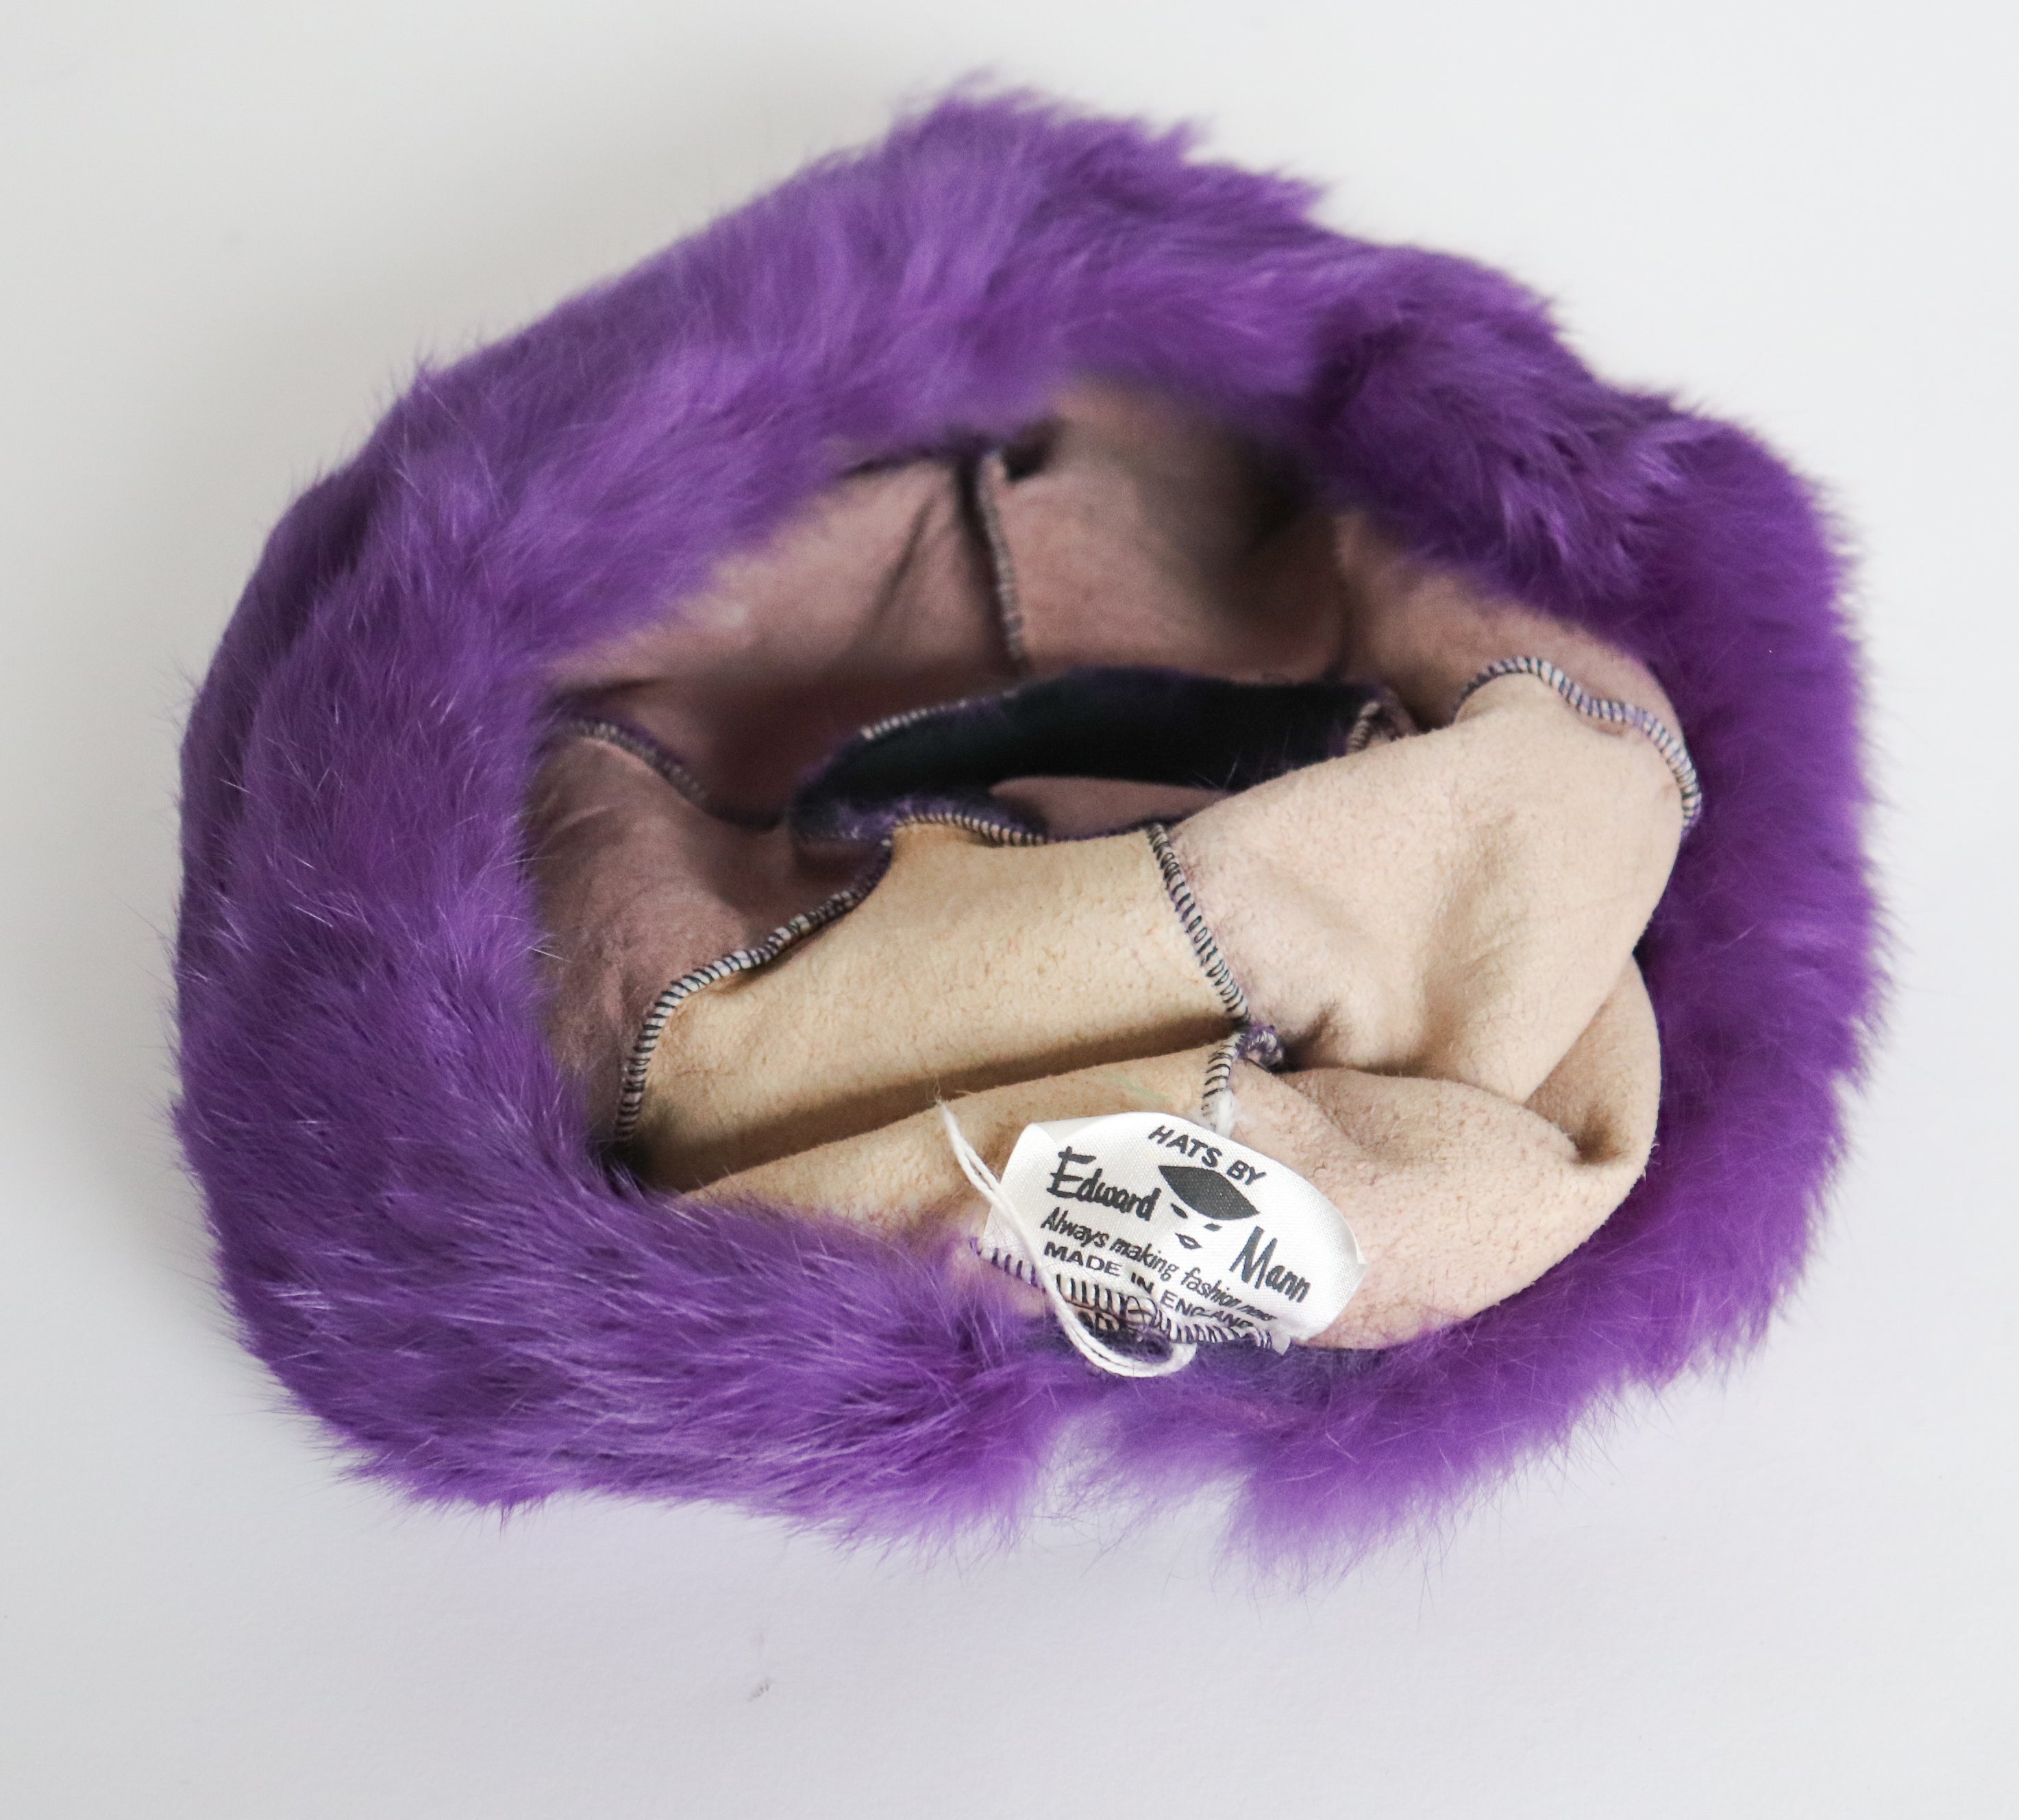 Edward Mann Purple Fur Beret Hat - Vintage 1960s - Large